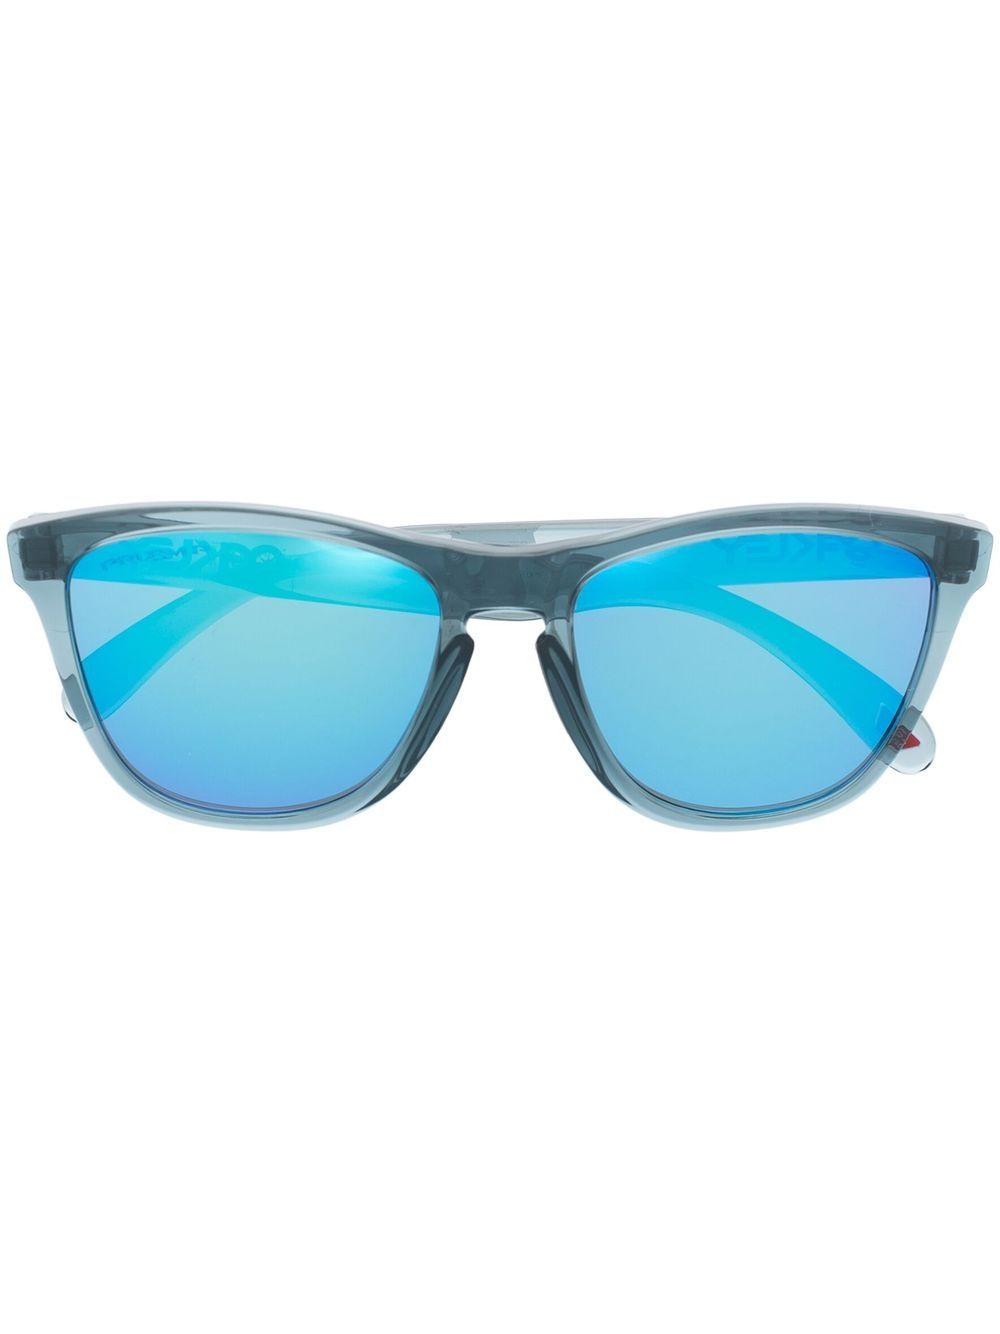 White rounded square-frame sunglasses